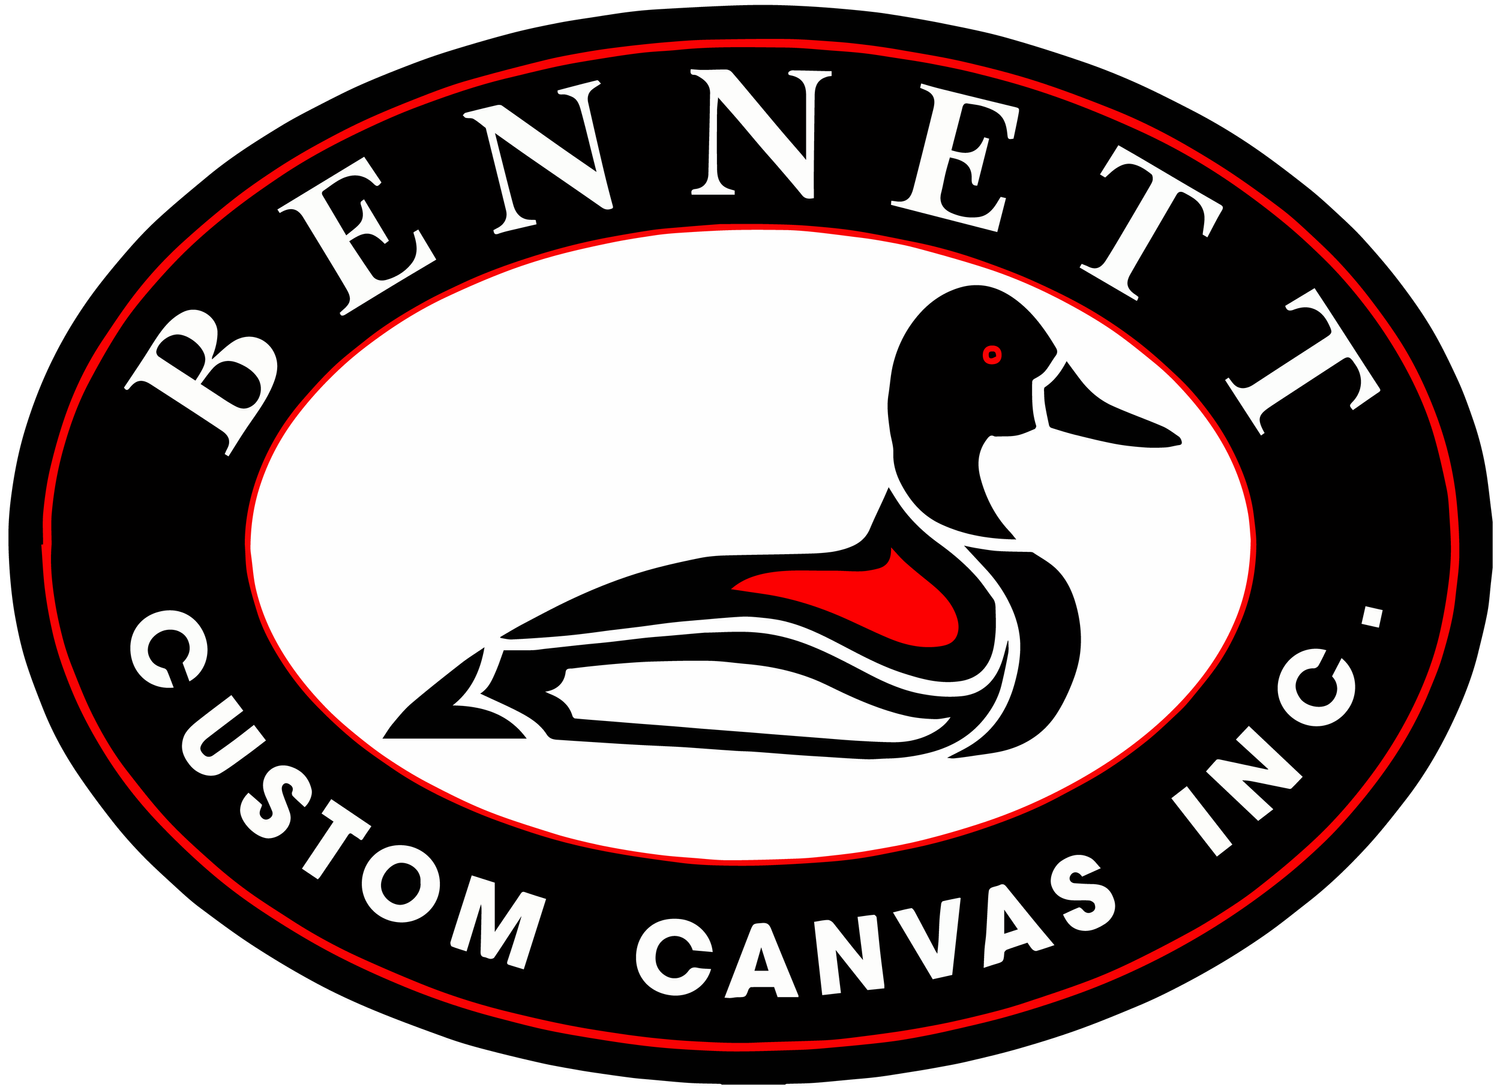 Bennett Custom Canvas Inc.